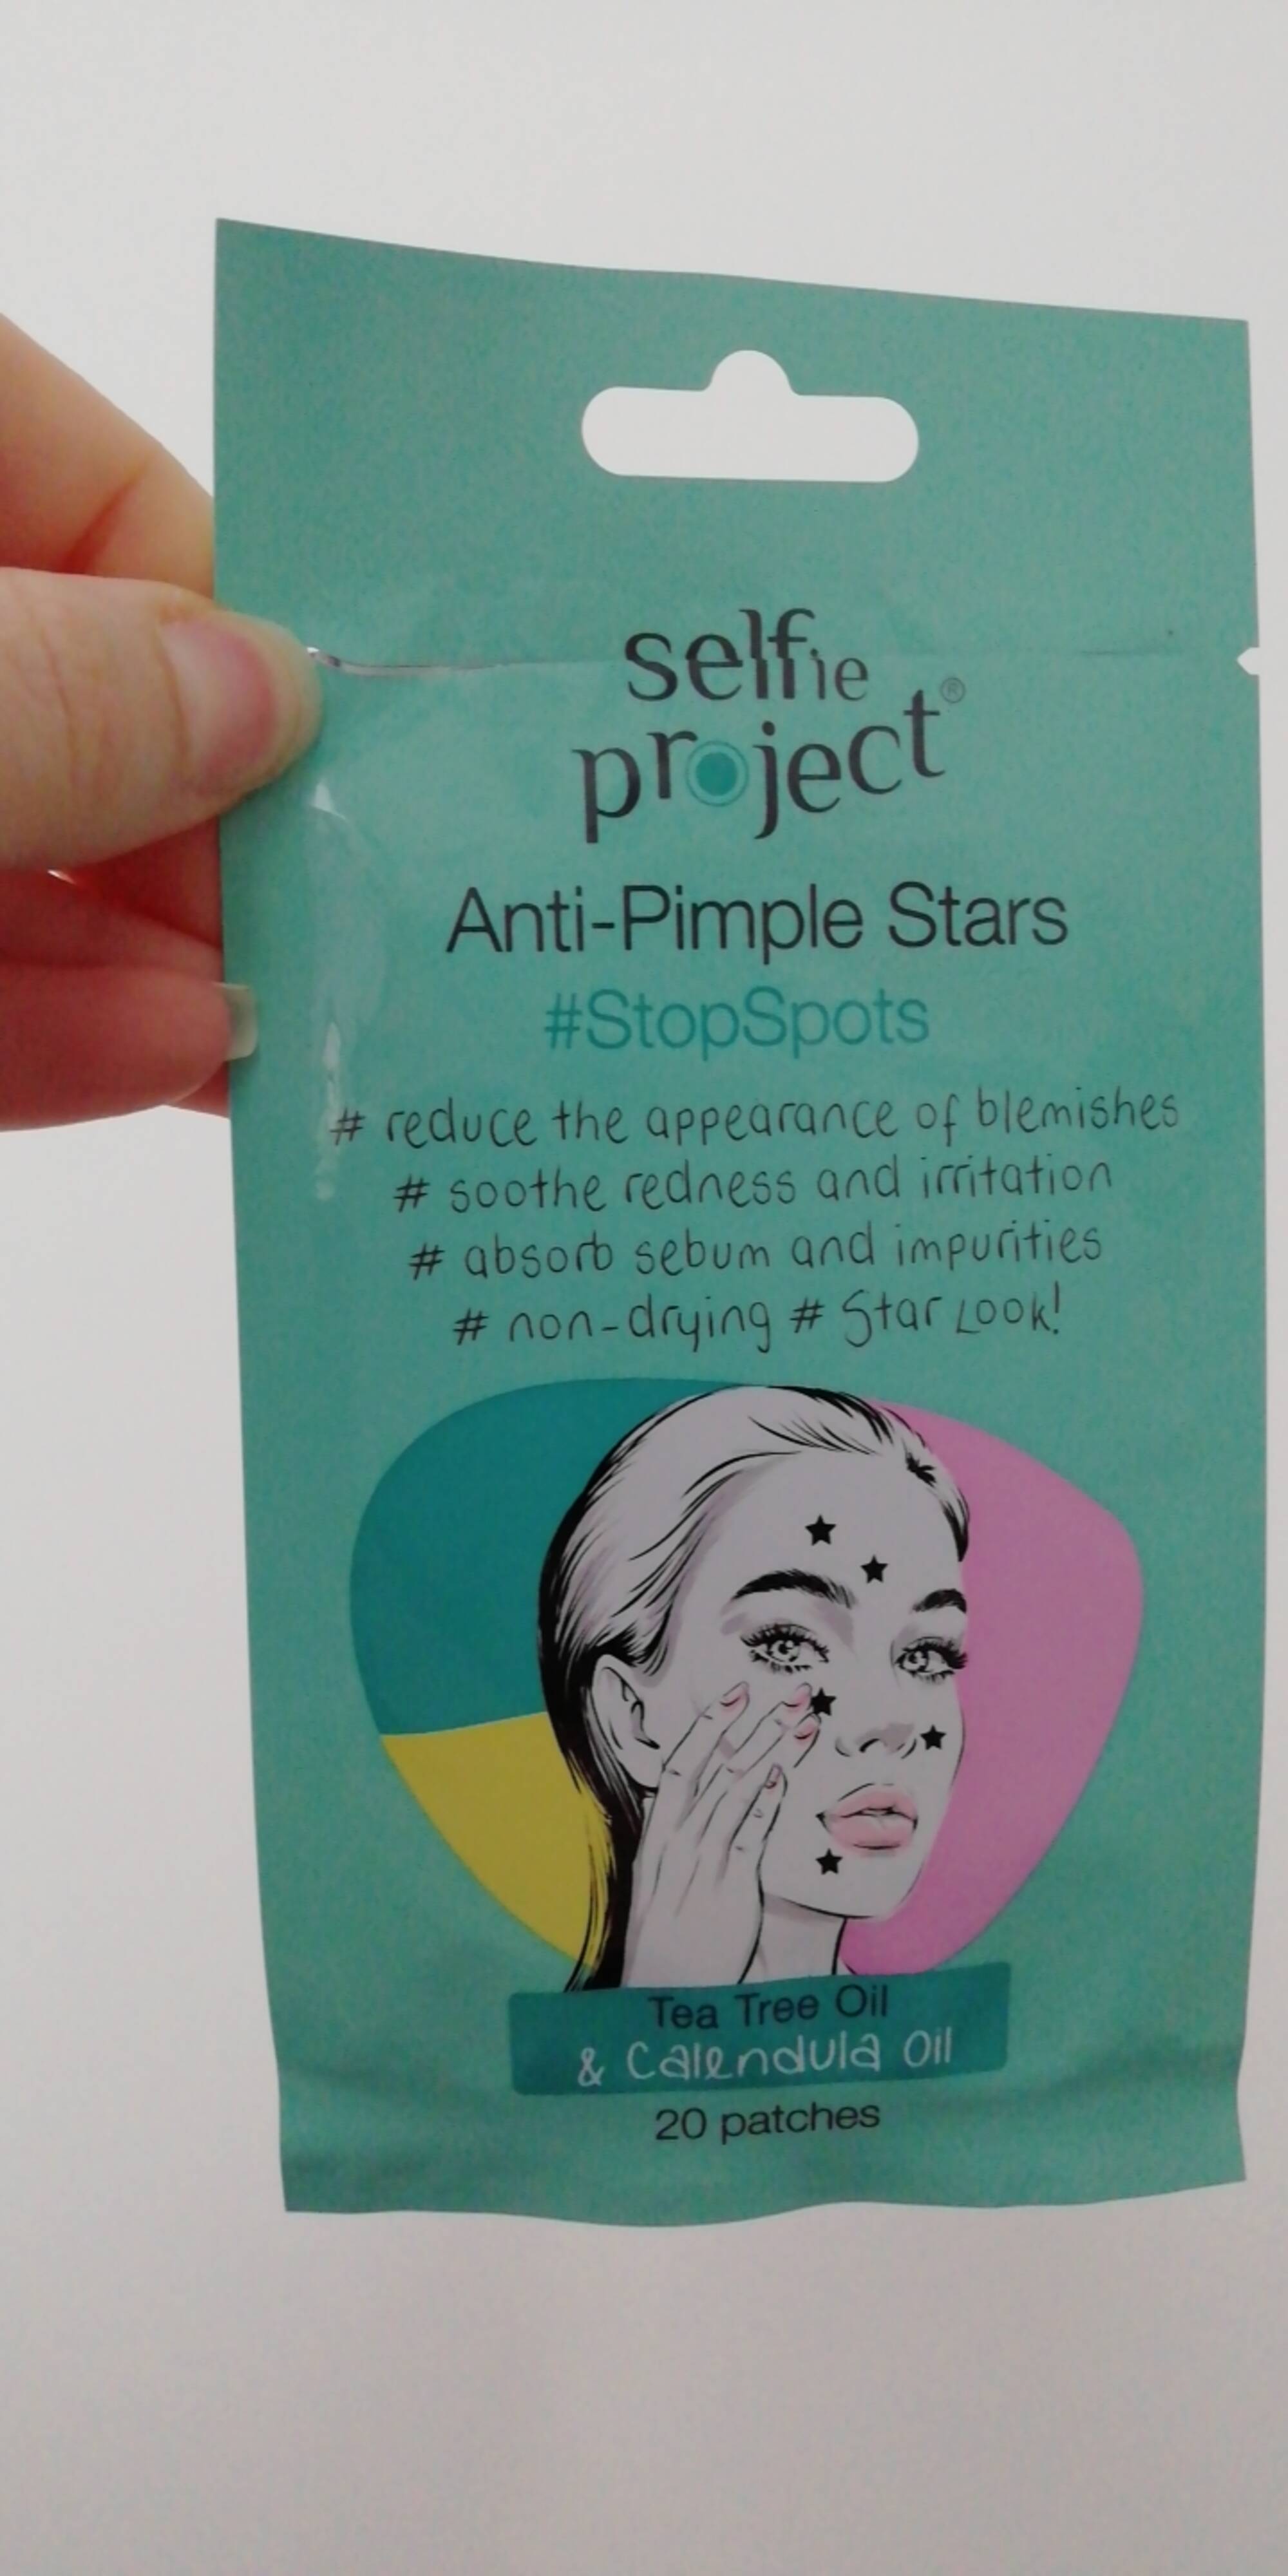 SELFIE PROJECT - Anti-Pimple Stars #StopSpots